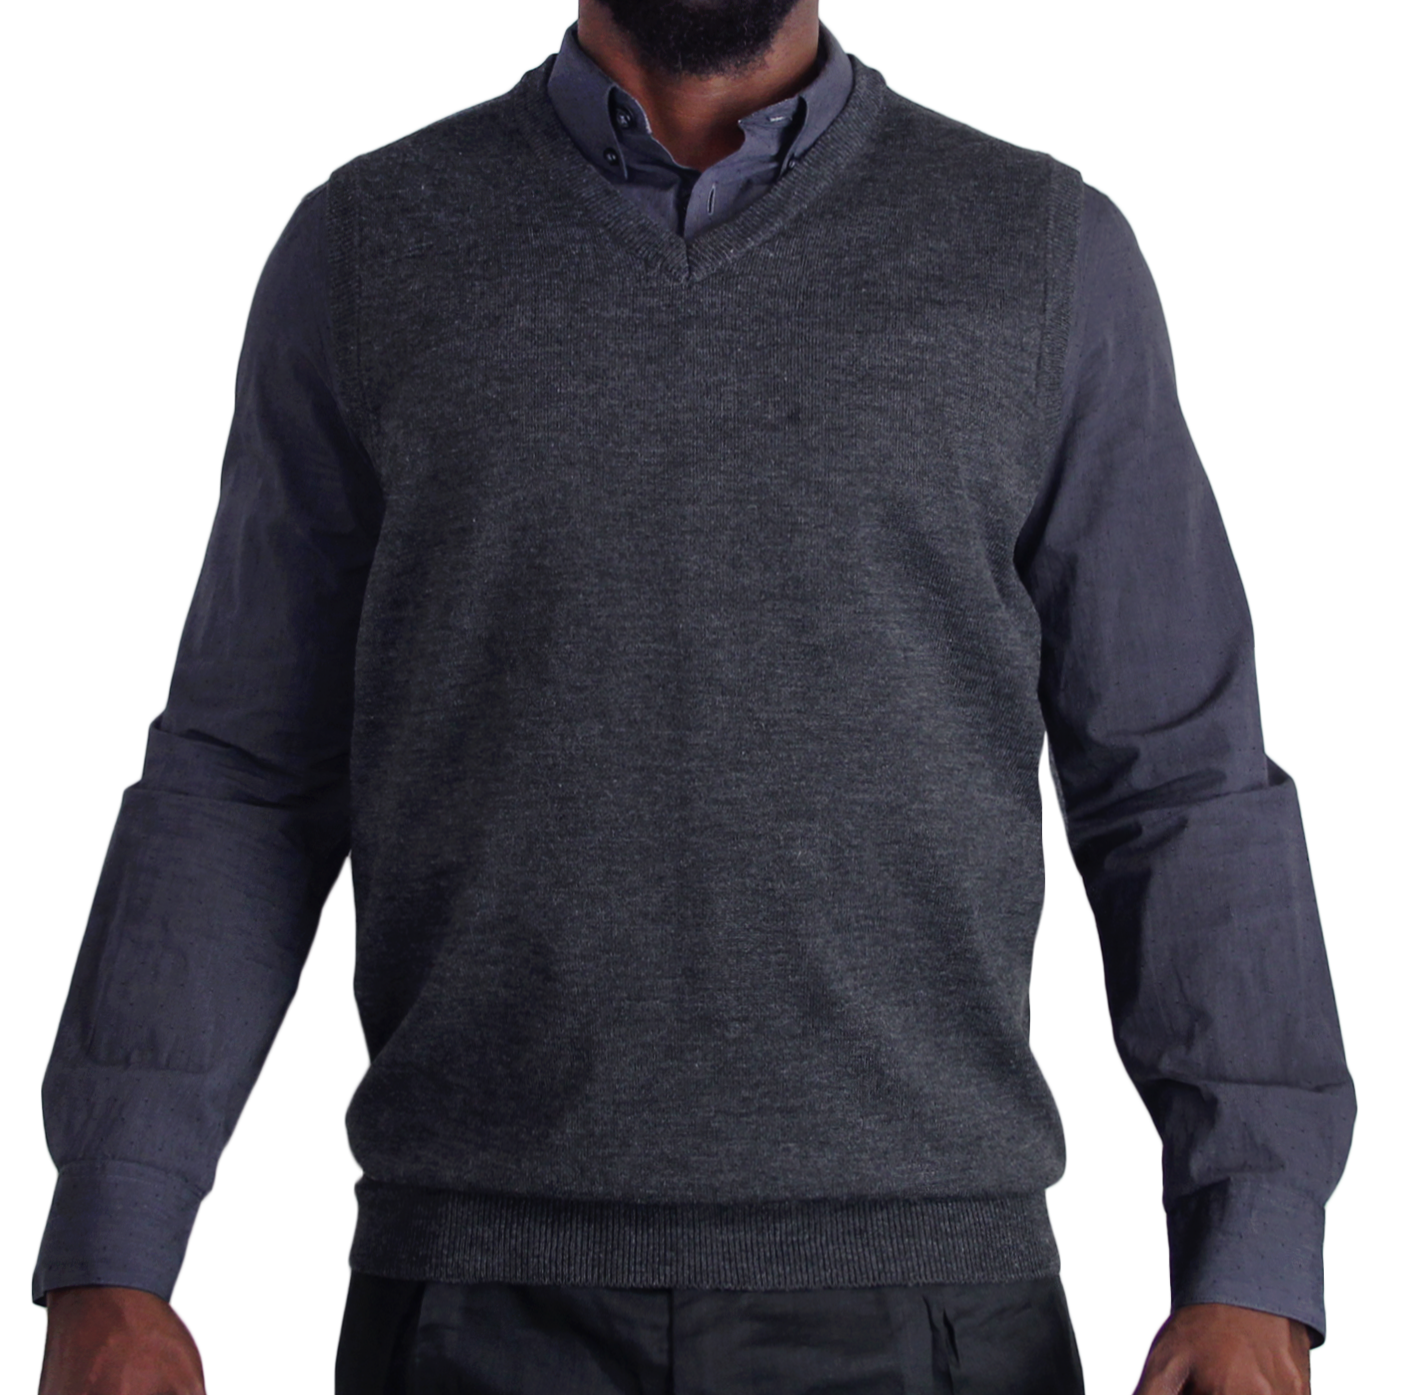 Blue Ocean Mens Casual Sweater Vest (sv-280)